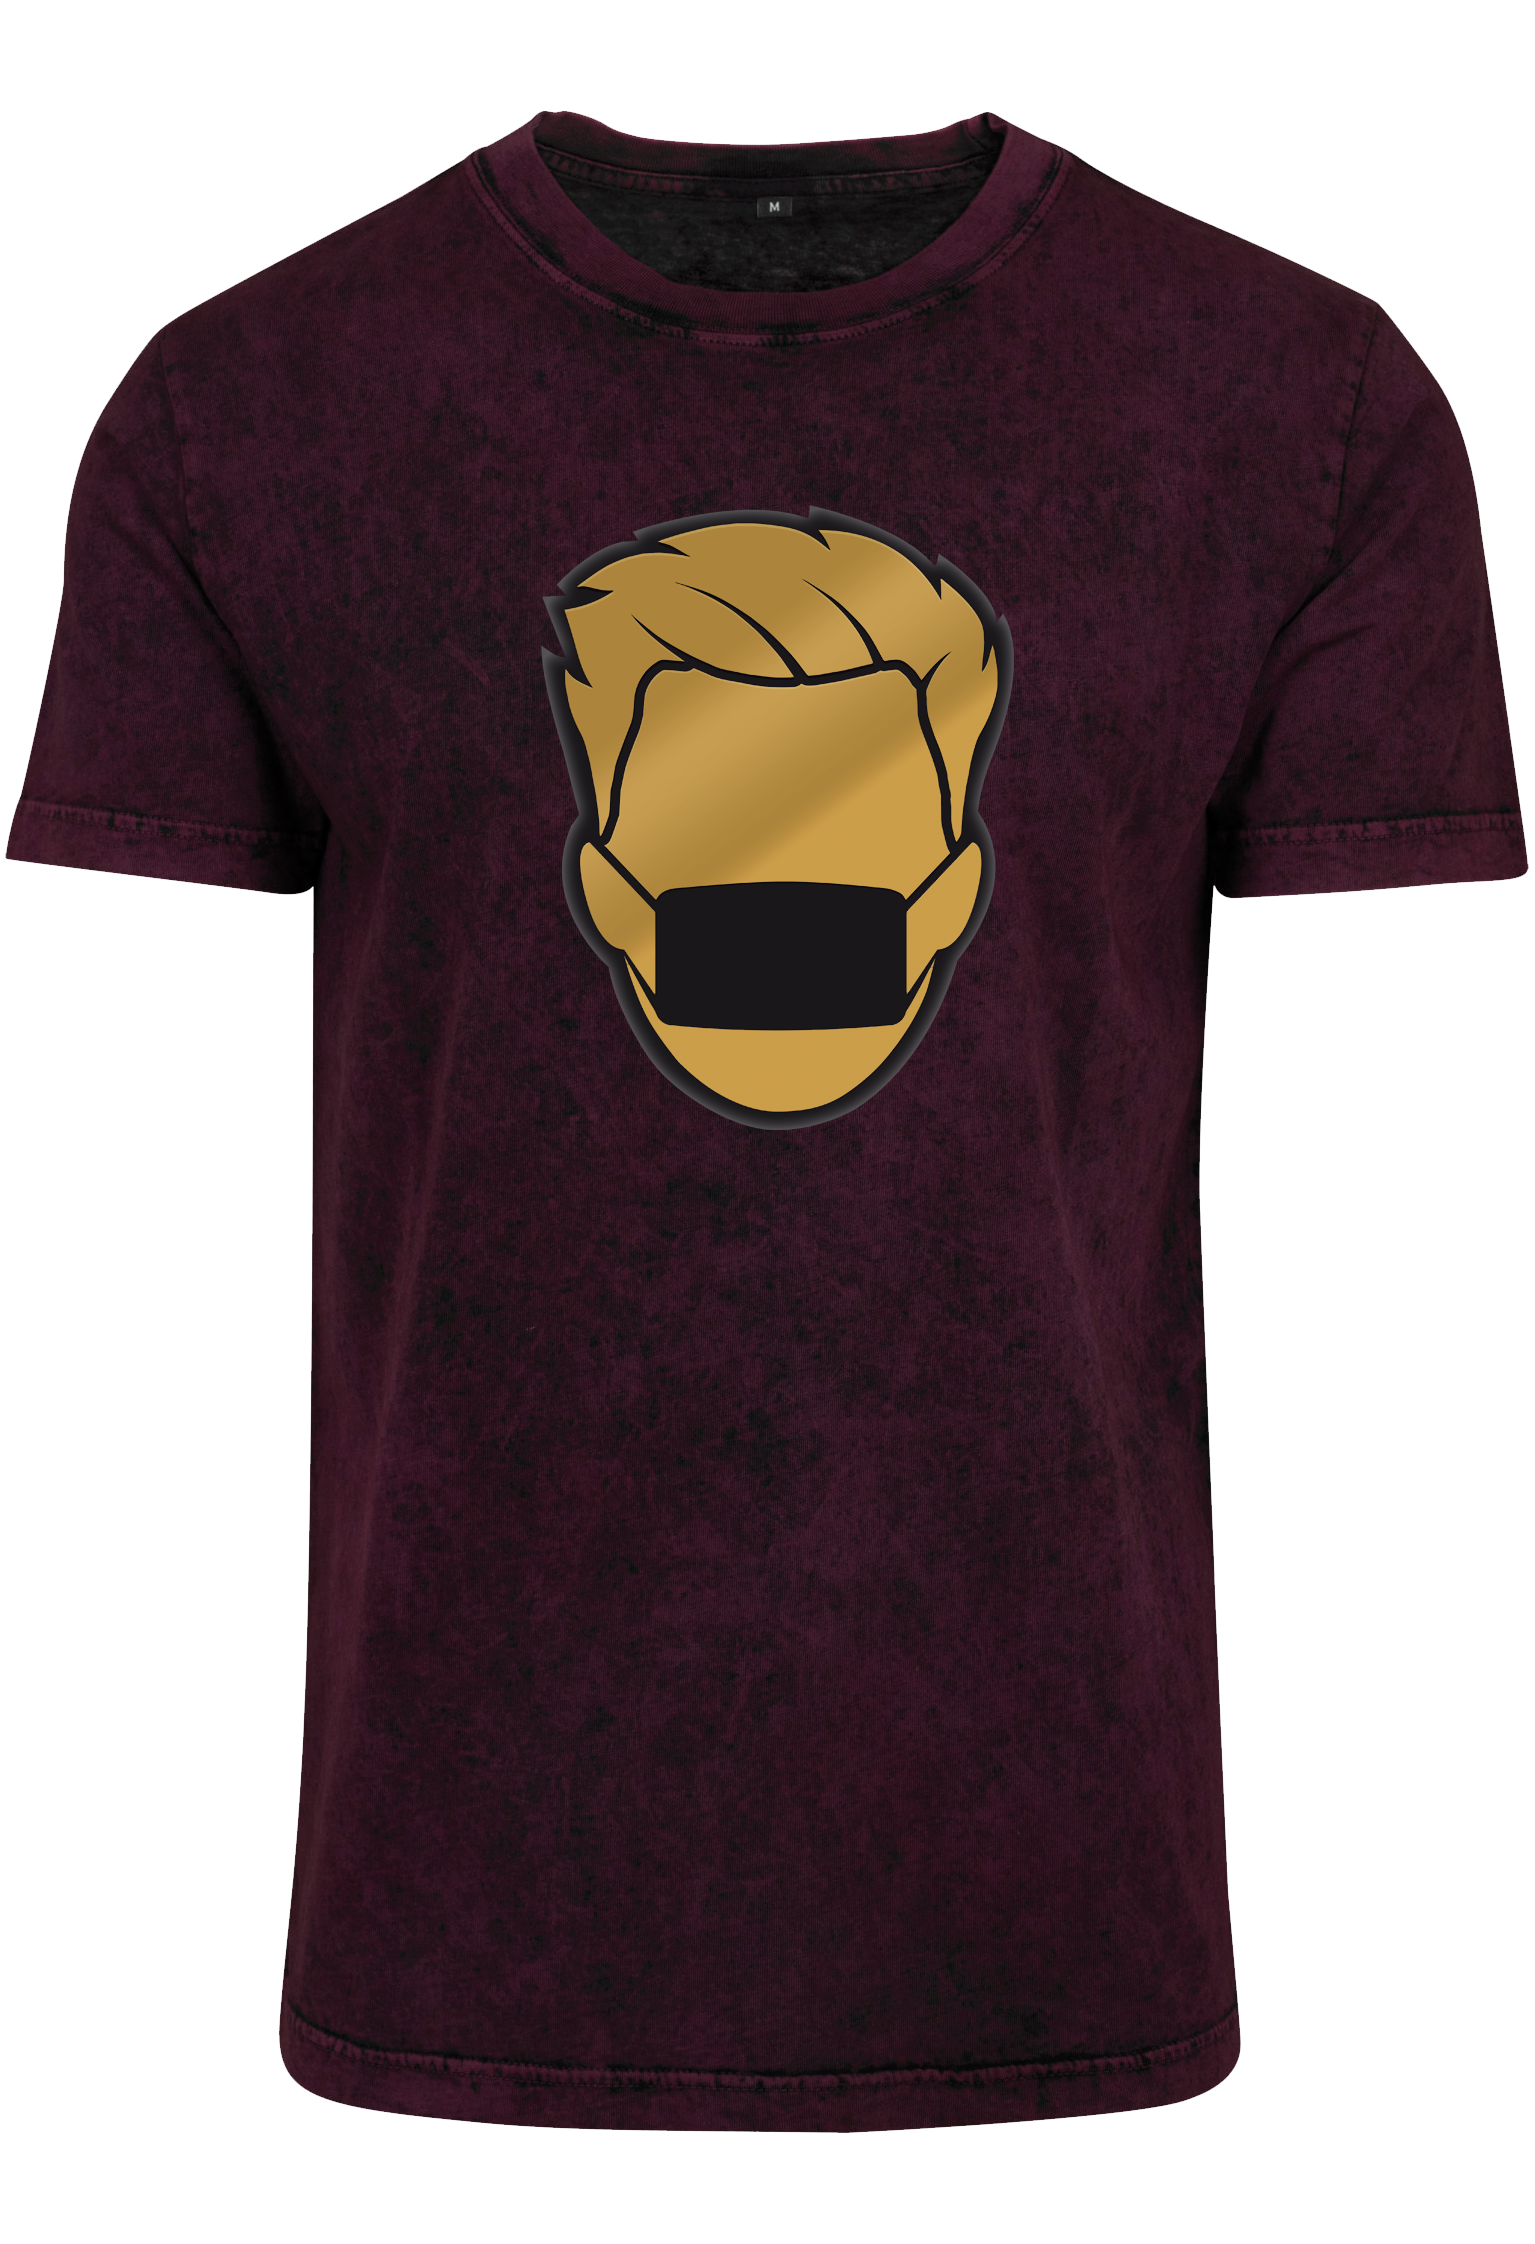 Gollers Busa berry black T-Shirt